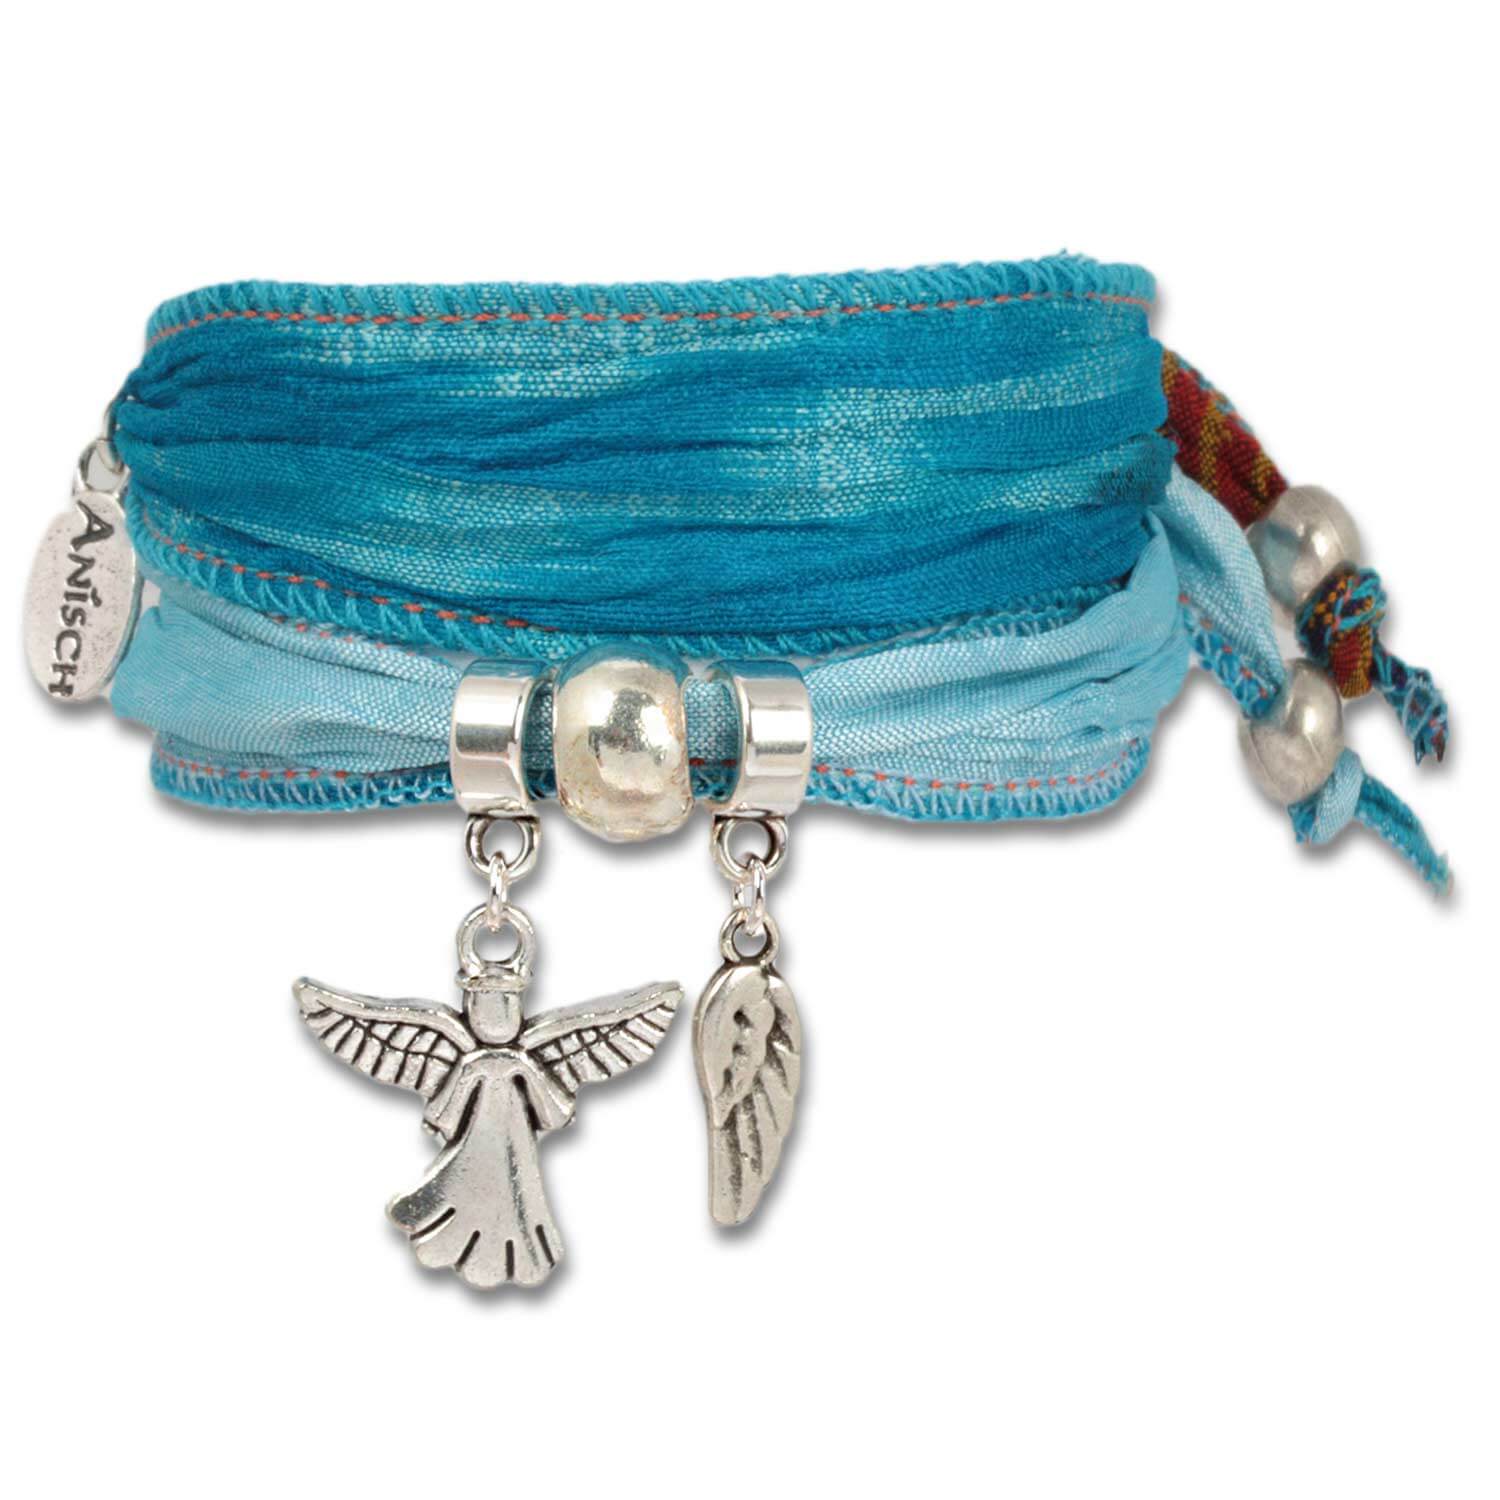 Princess Blue - Wings of Hope Armband aus indischen Saris